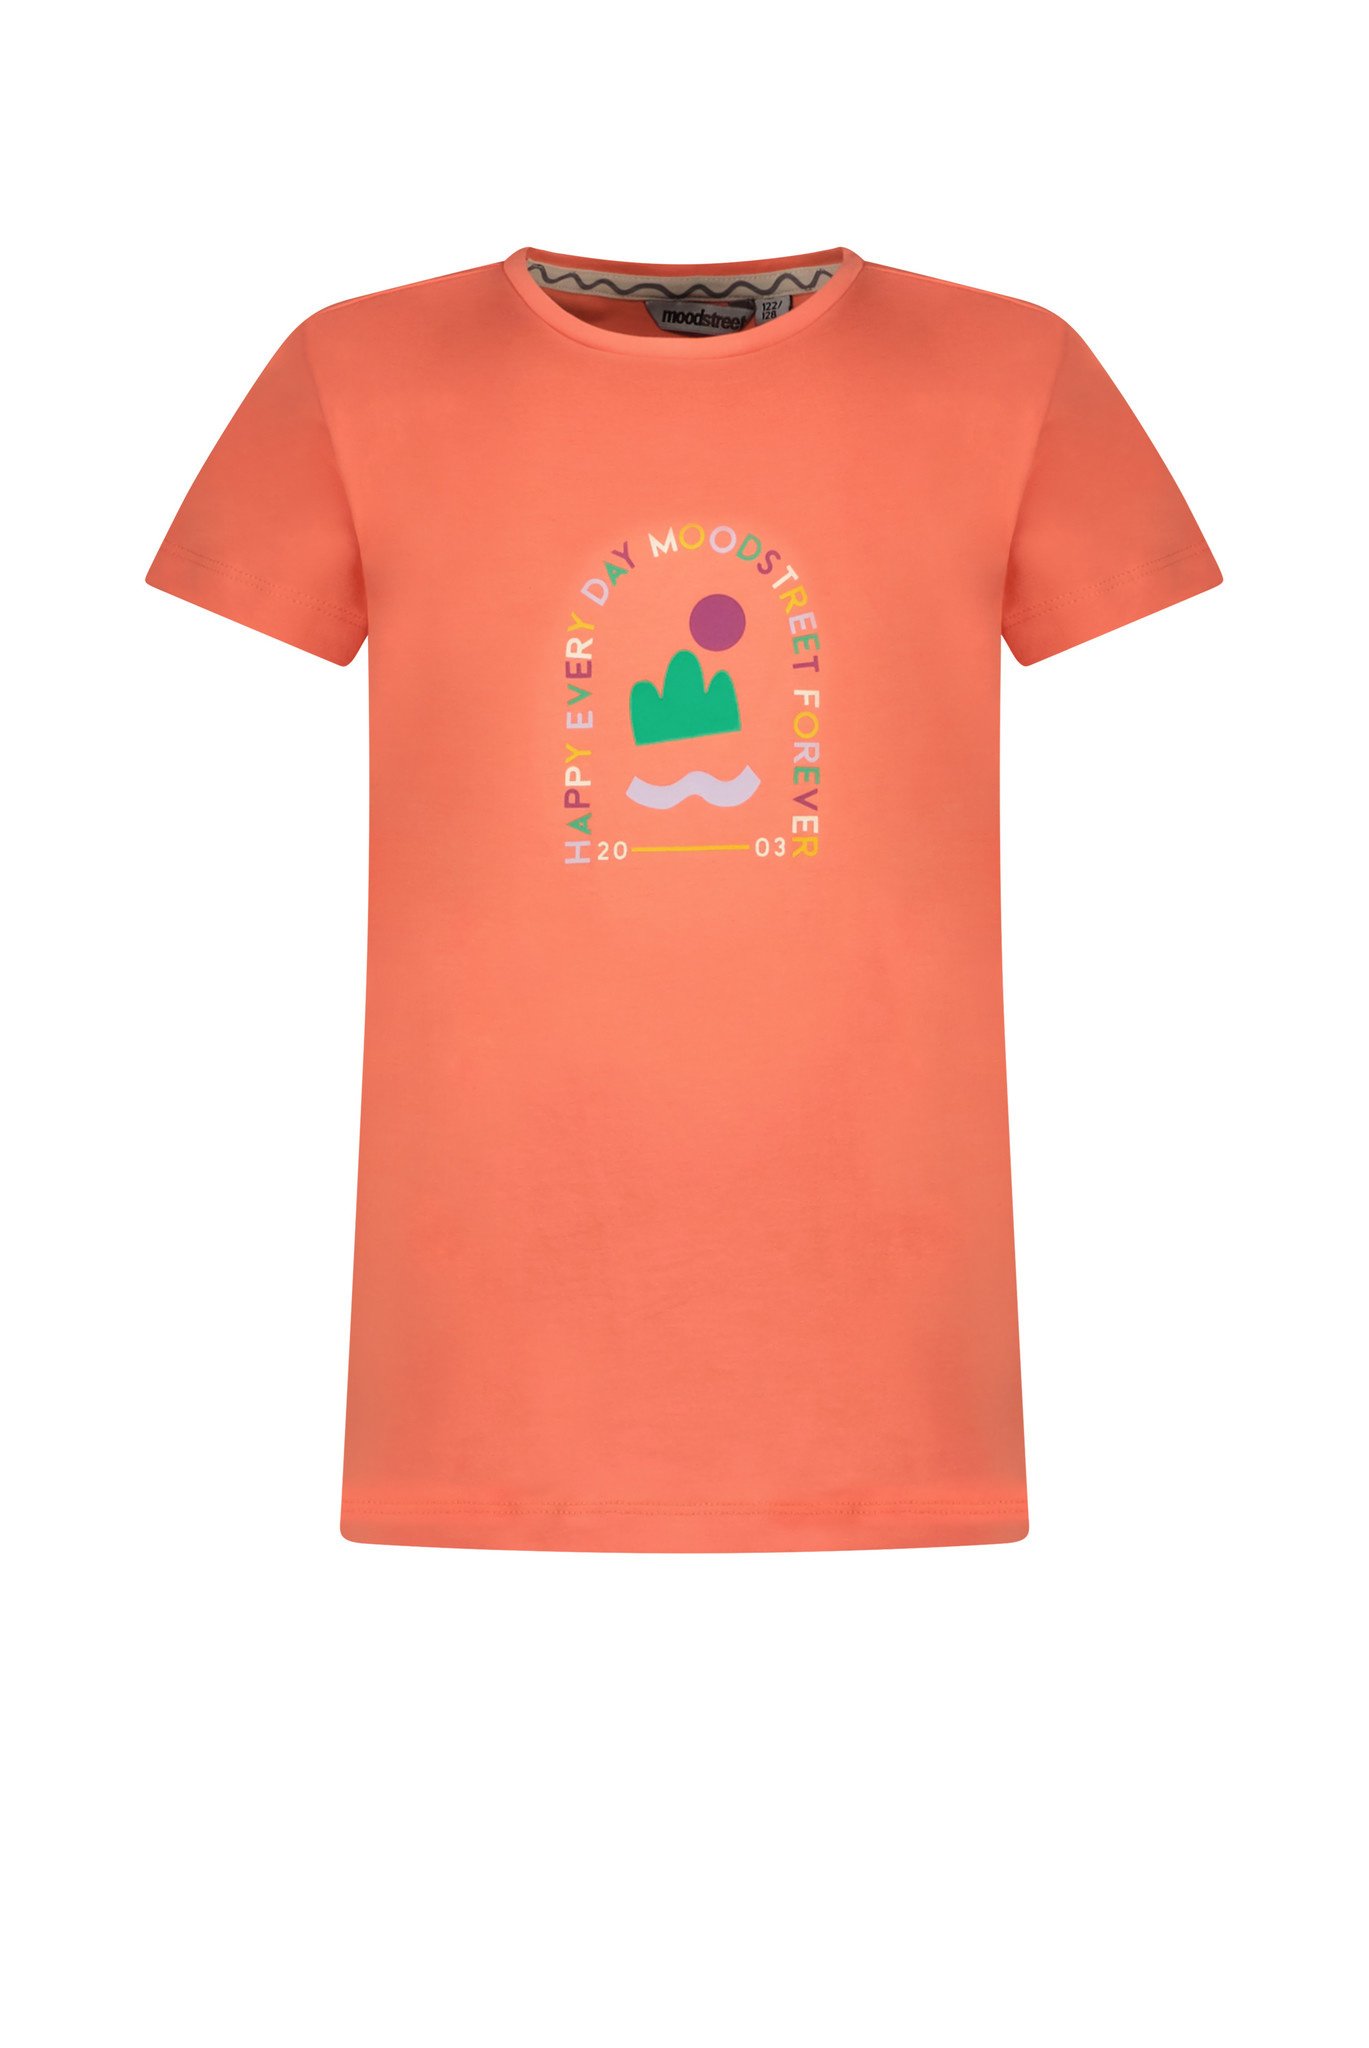 Moodstreet M302-5400 Meisjes T-shirt Coral - Maat 122/128